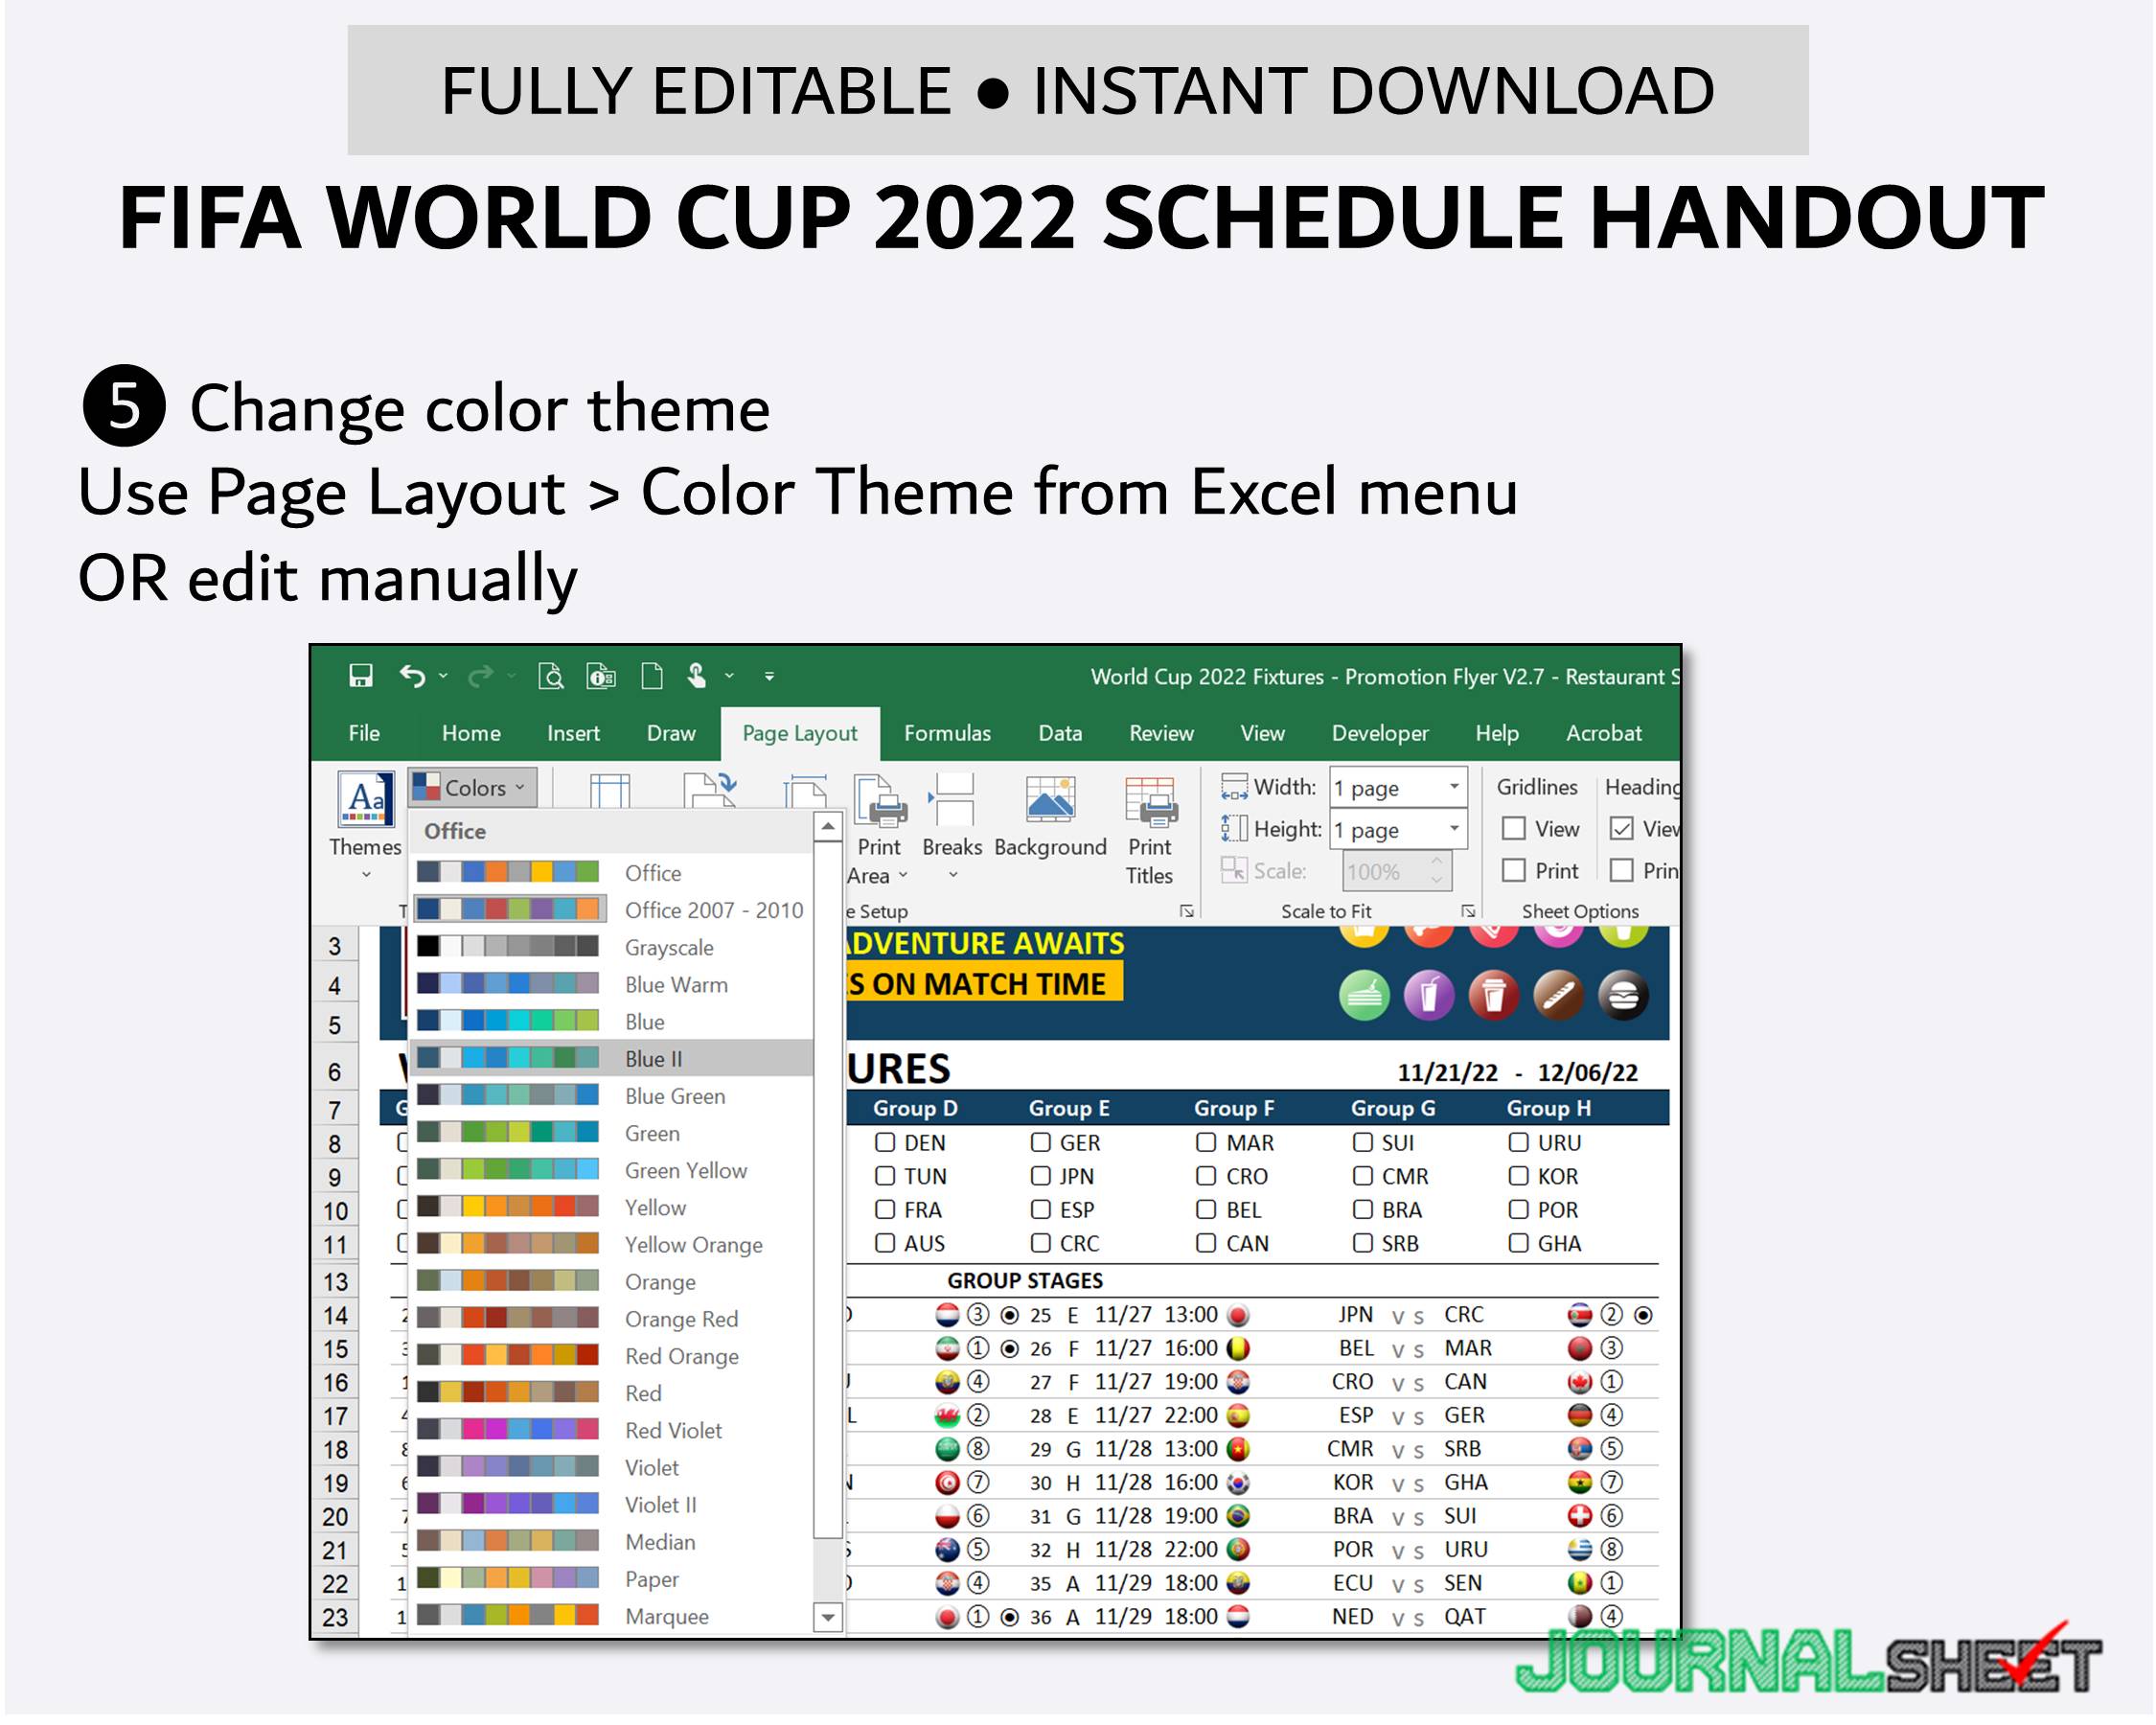 World Cup 2022 Handout - Change Theme